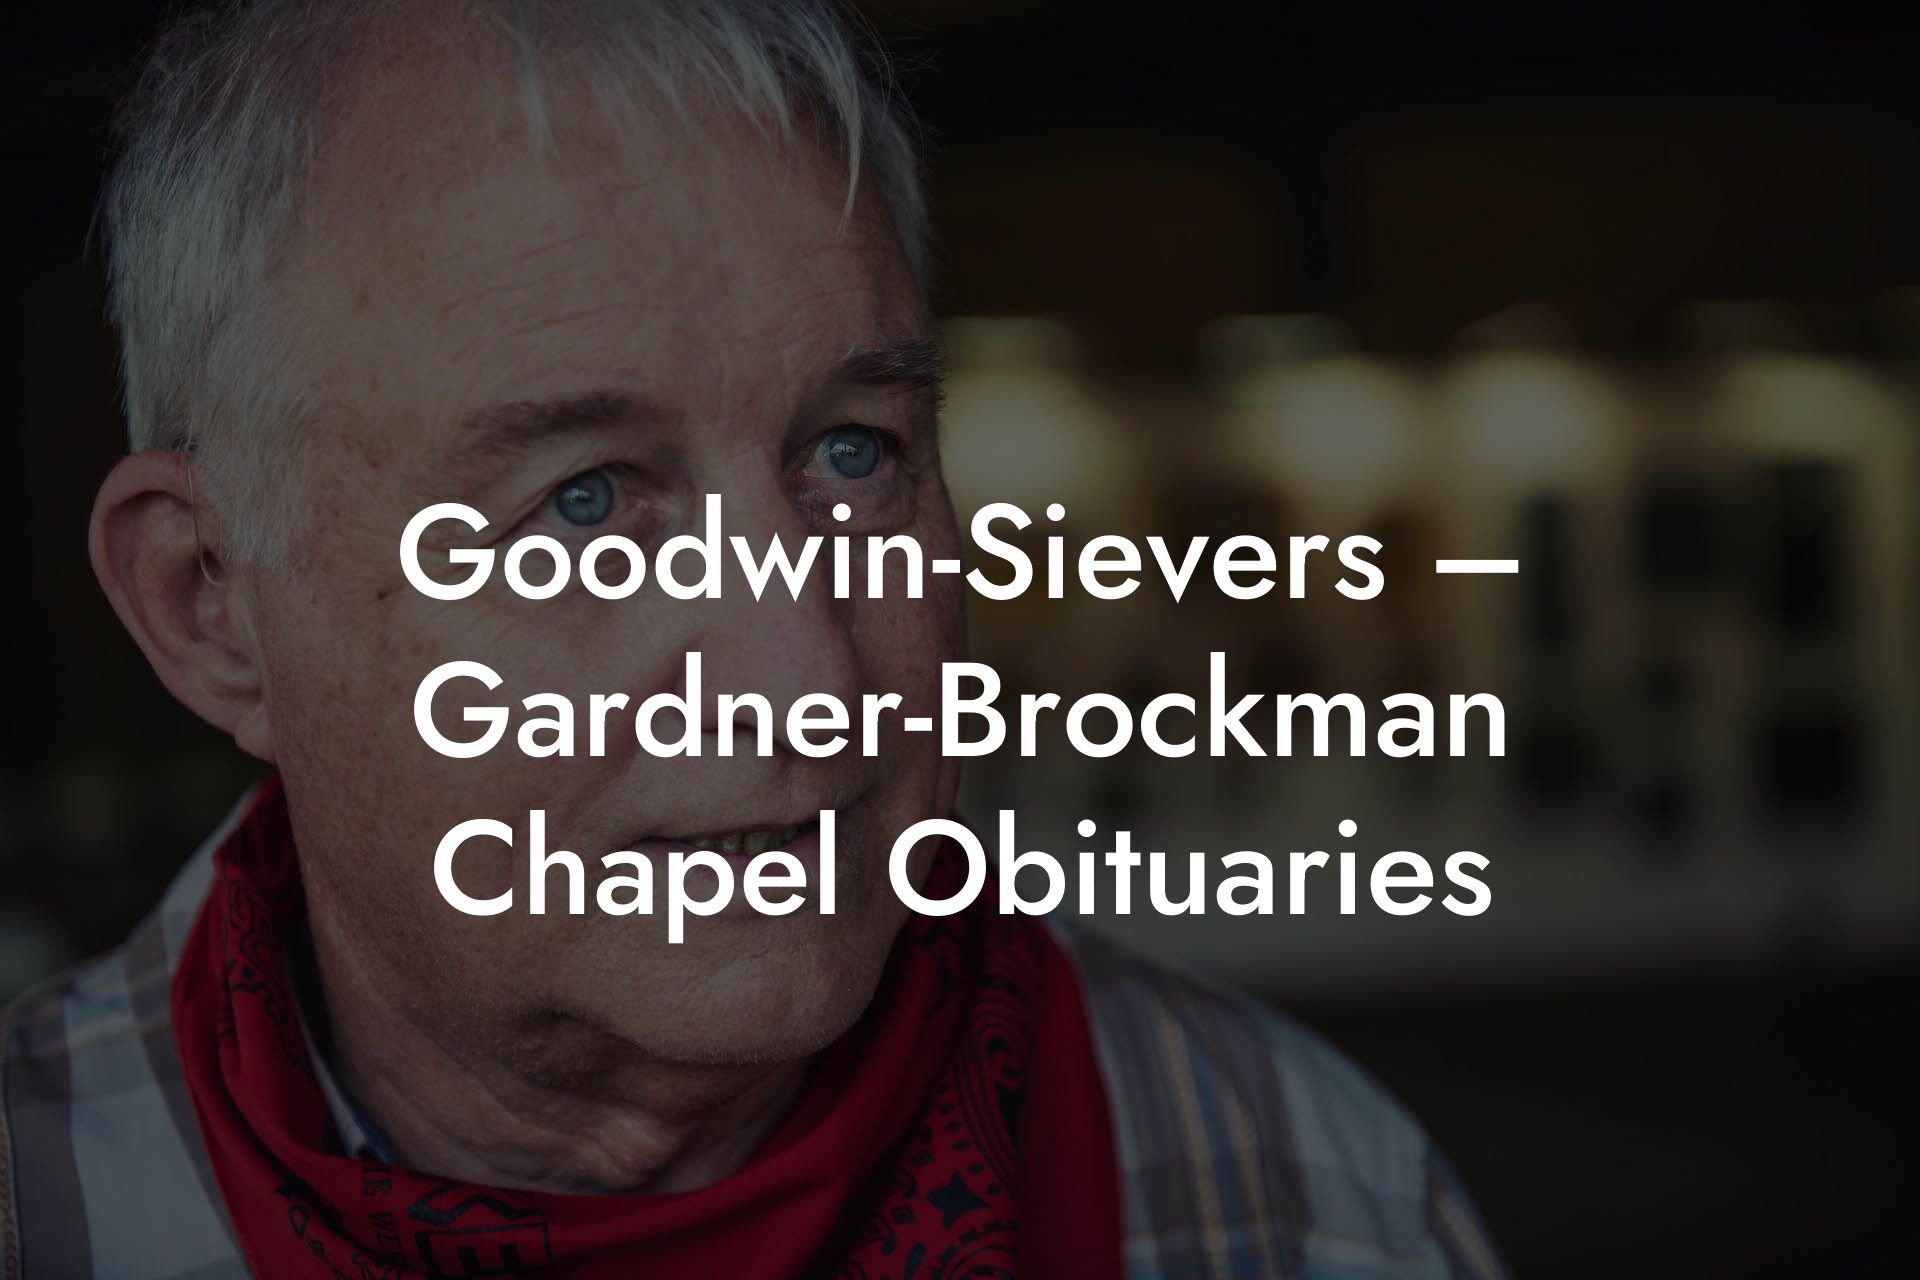 Goodwin-Sievers – Gardner-Brockman Chapel Obituaries